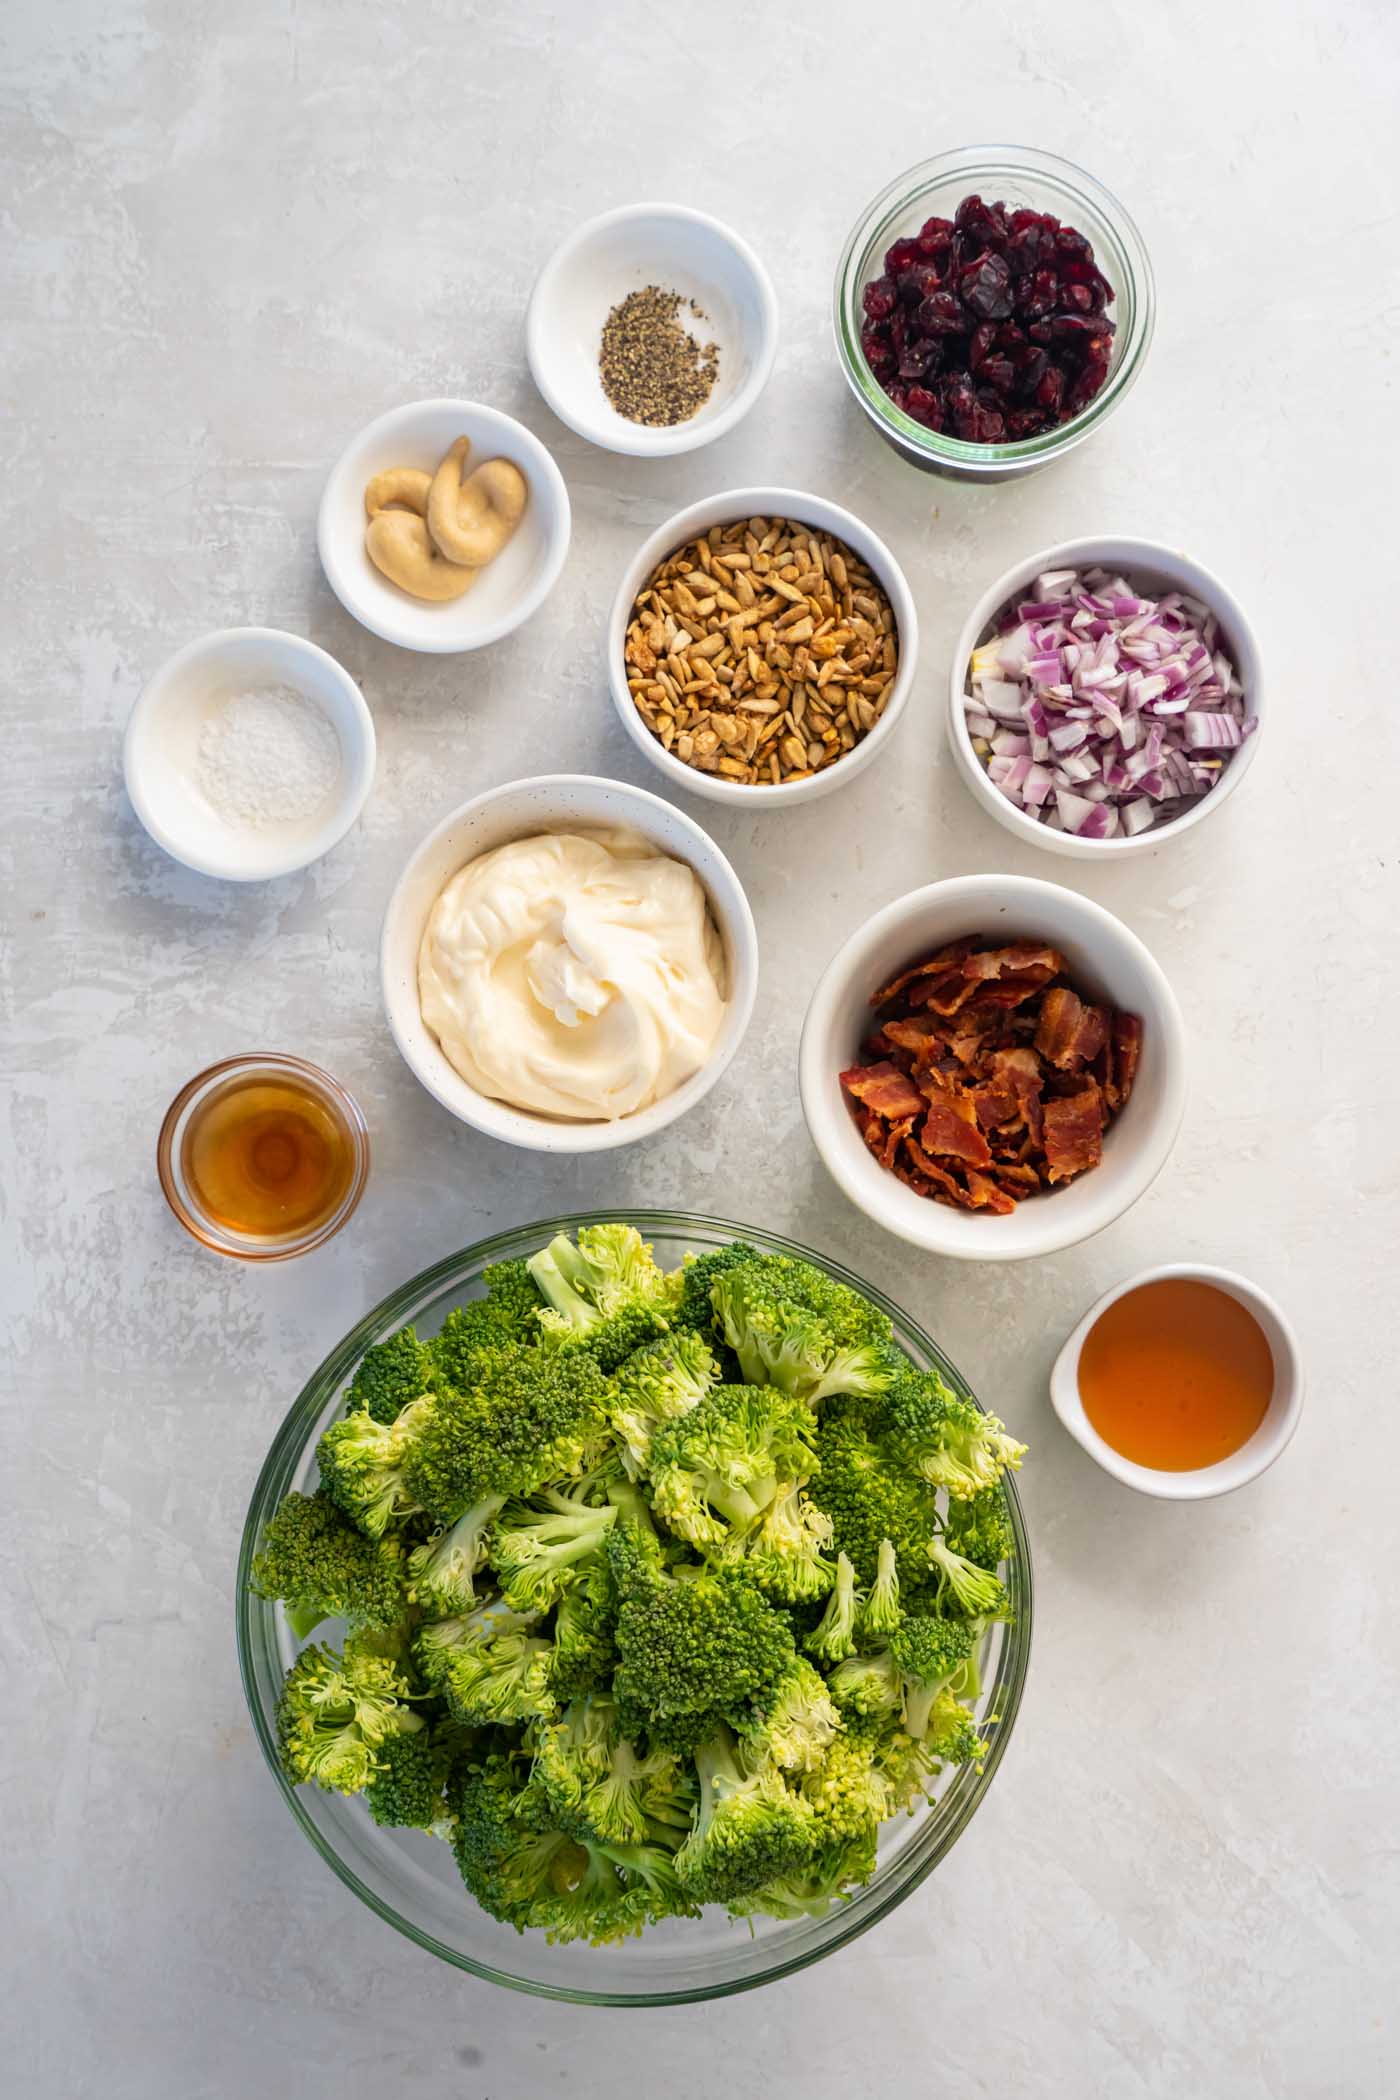 Ingredients for broccoli salad recipe.